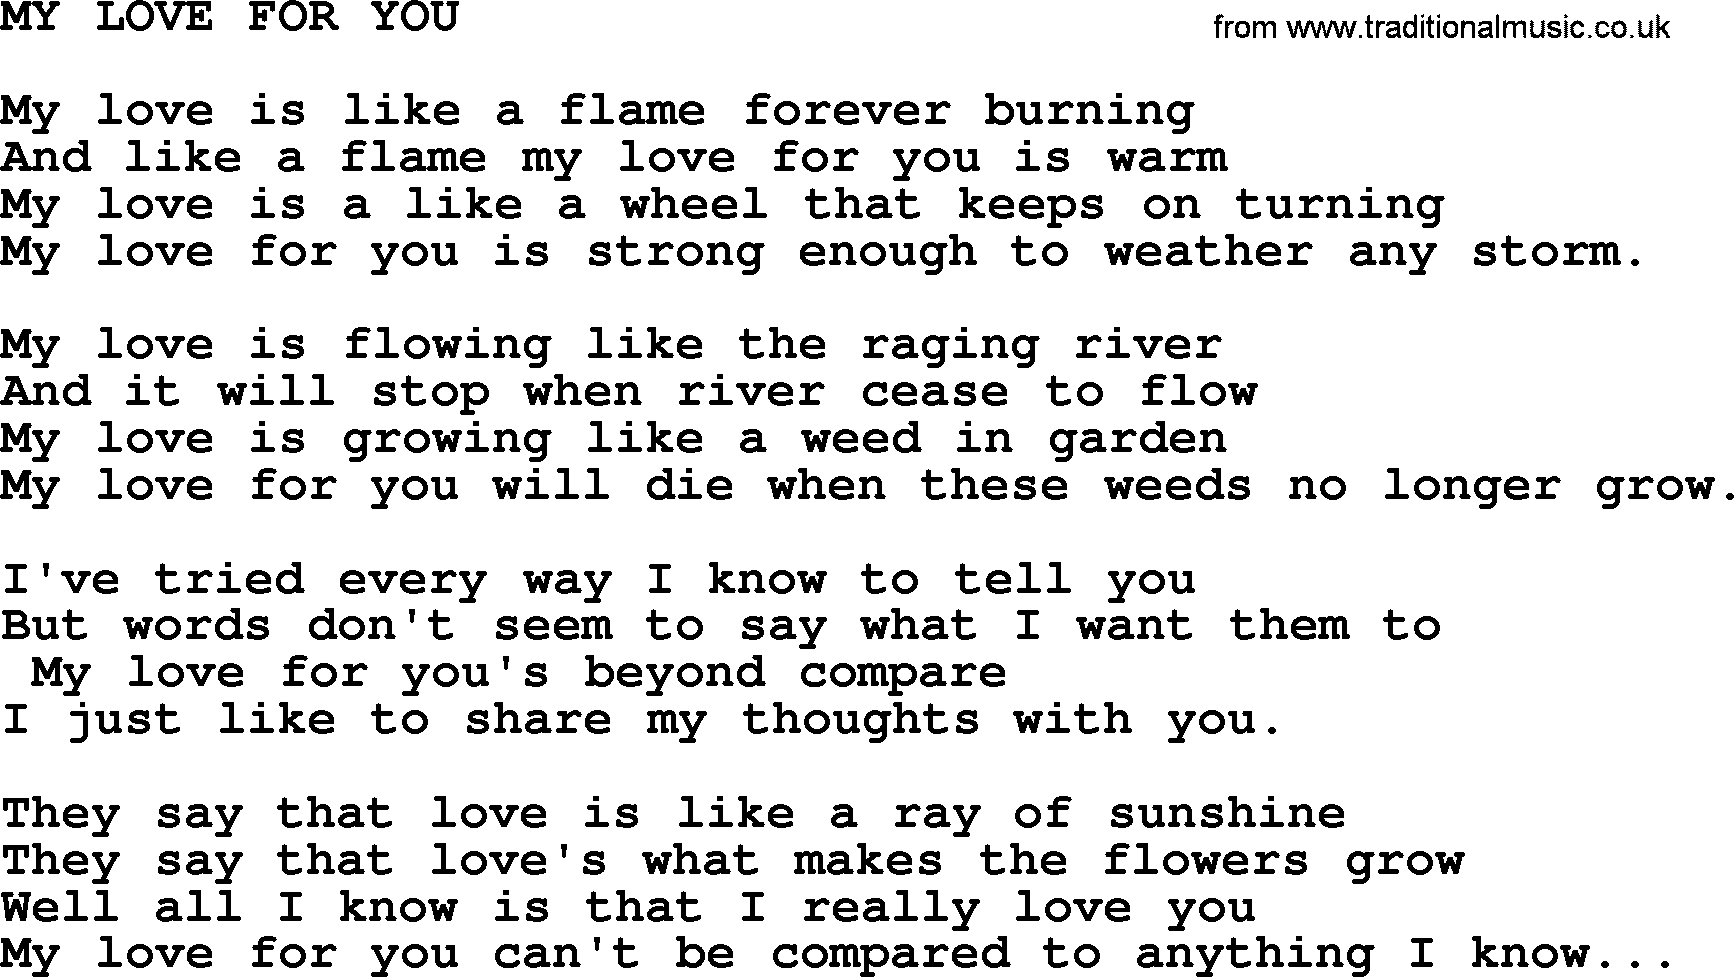 Merle Haggard song: My Love For You, lyrics.